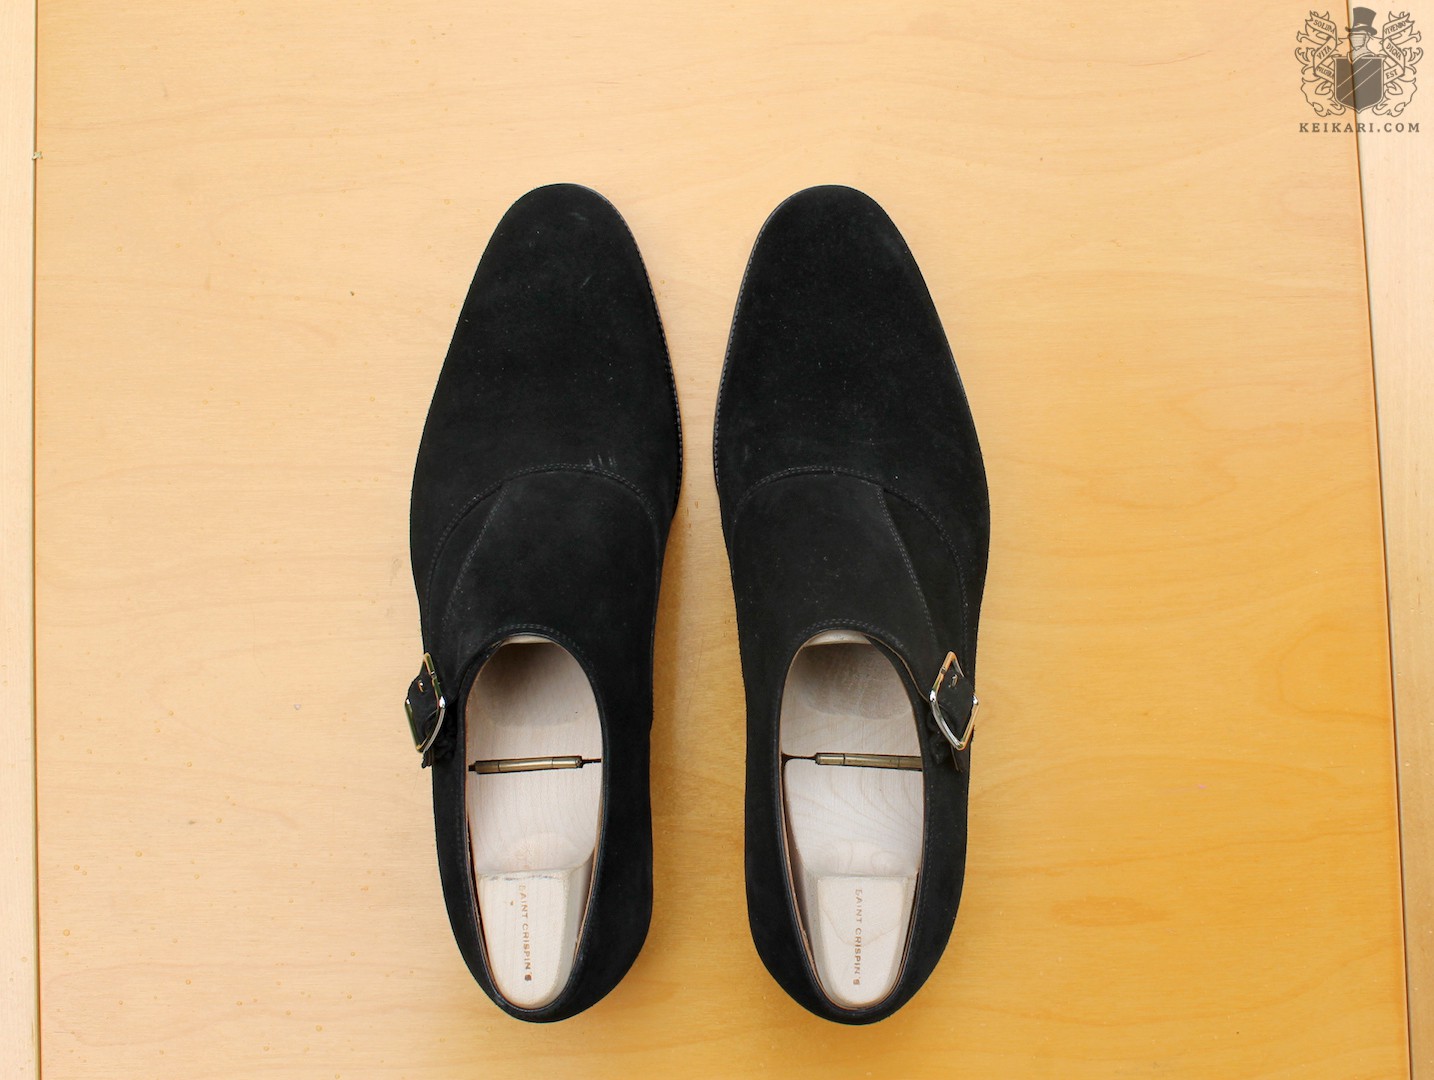 Saint_Crispins_black_suede_monk_shoes_from_Keikari_dot_com12.jpg